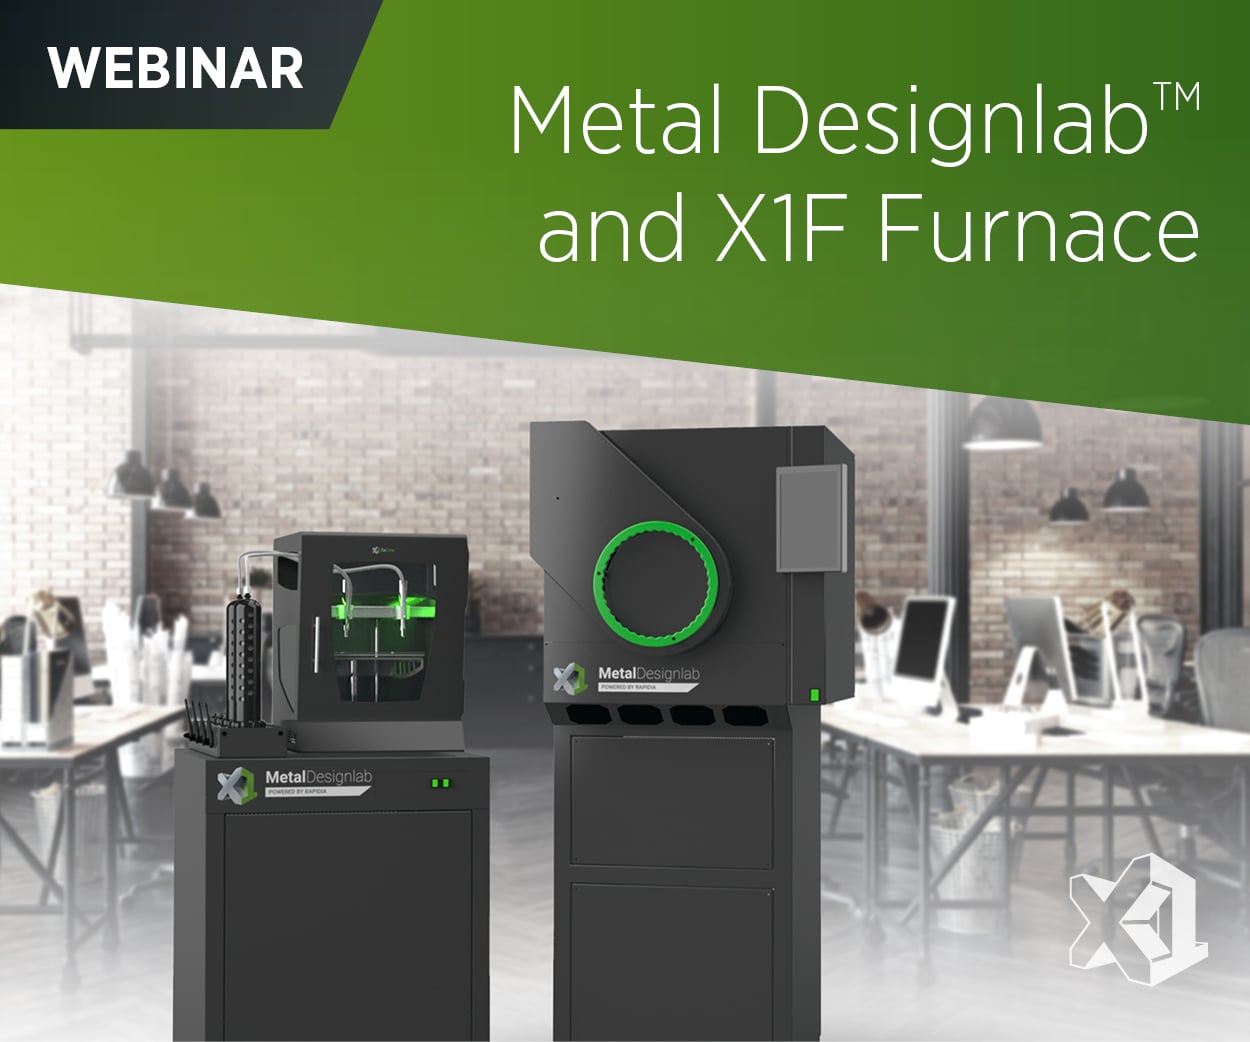 On-Demand Webinar: The ExOne Metal Designlab and X1F Advanced Furnace